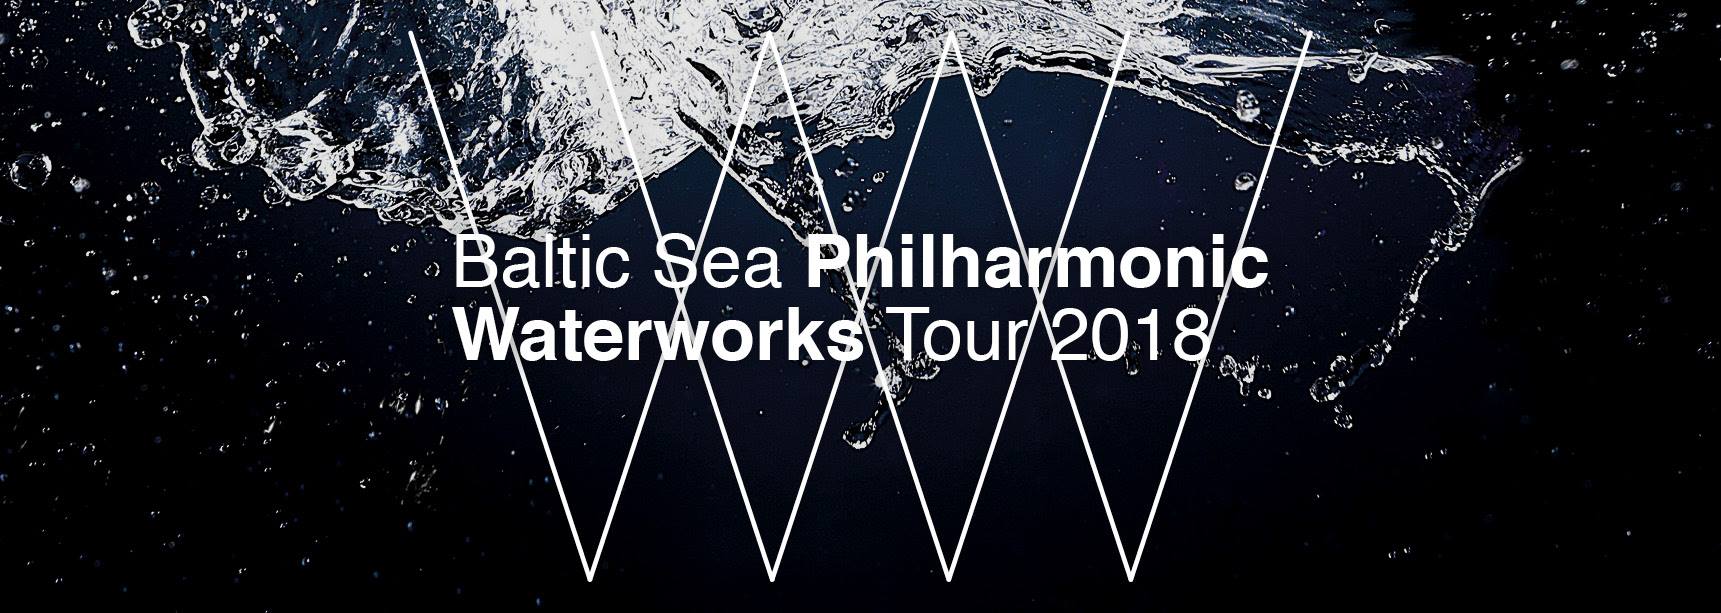 Baltic Sea Philharmonic Waterworks Concert Show - Coming Soon in UAE